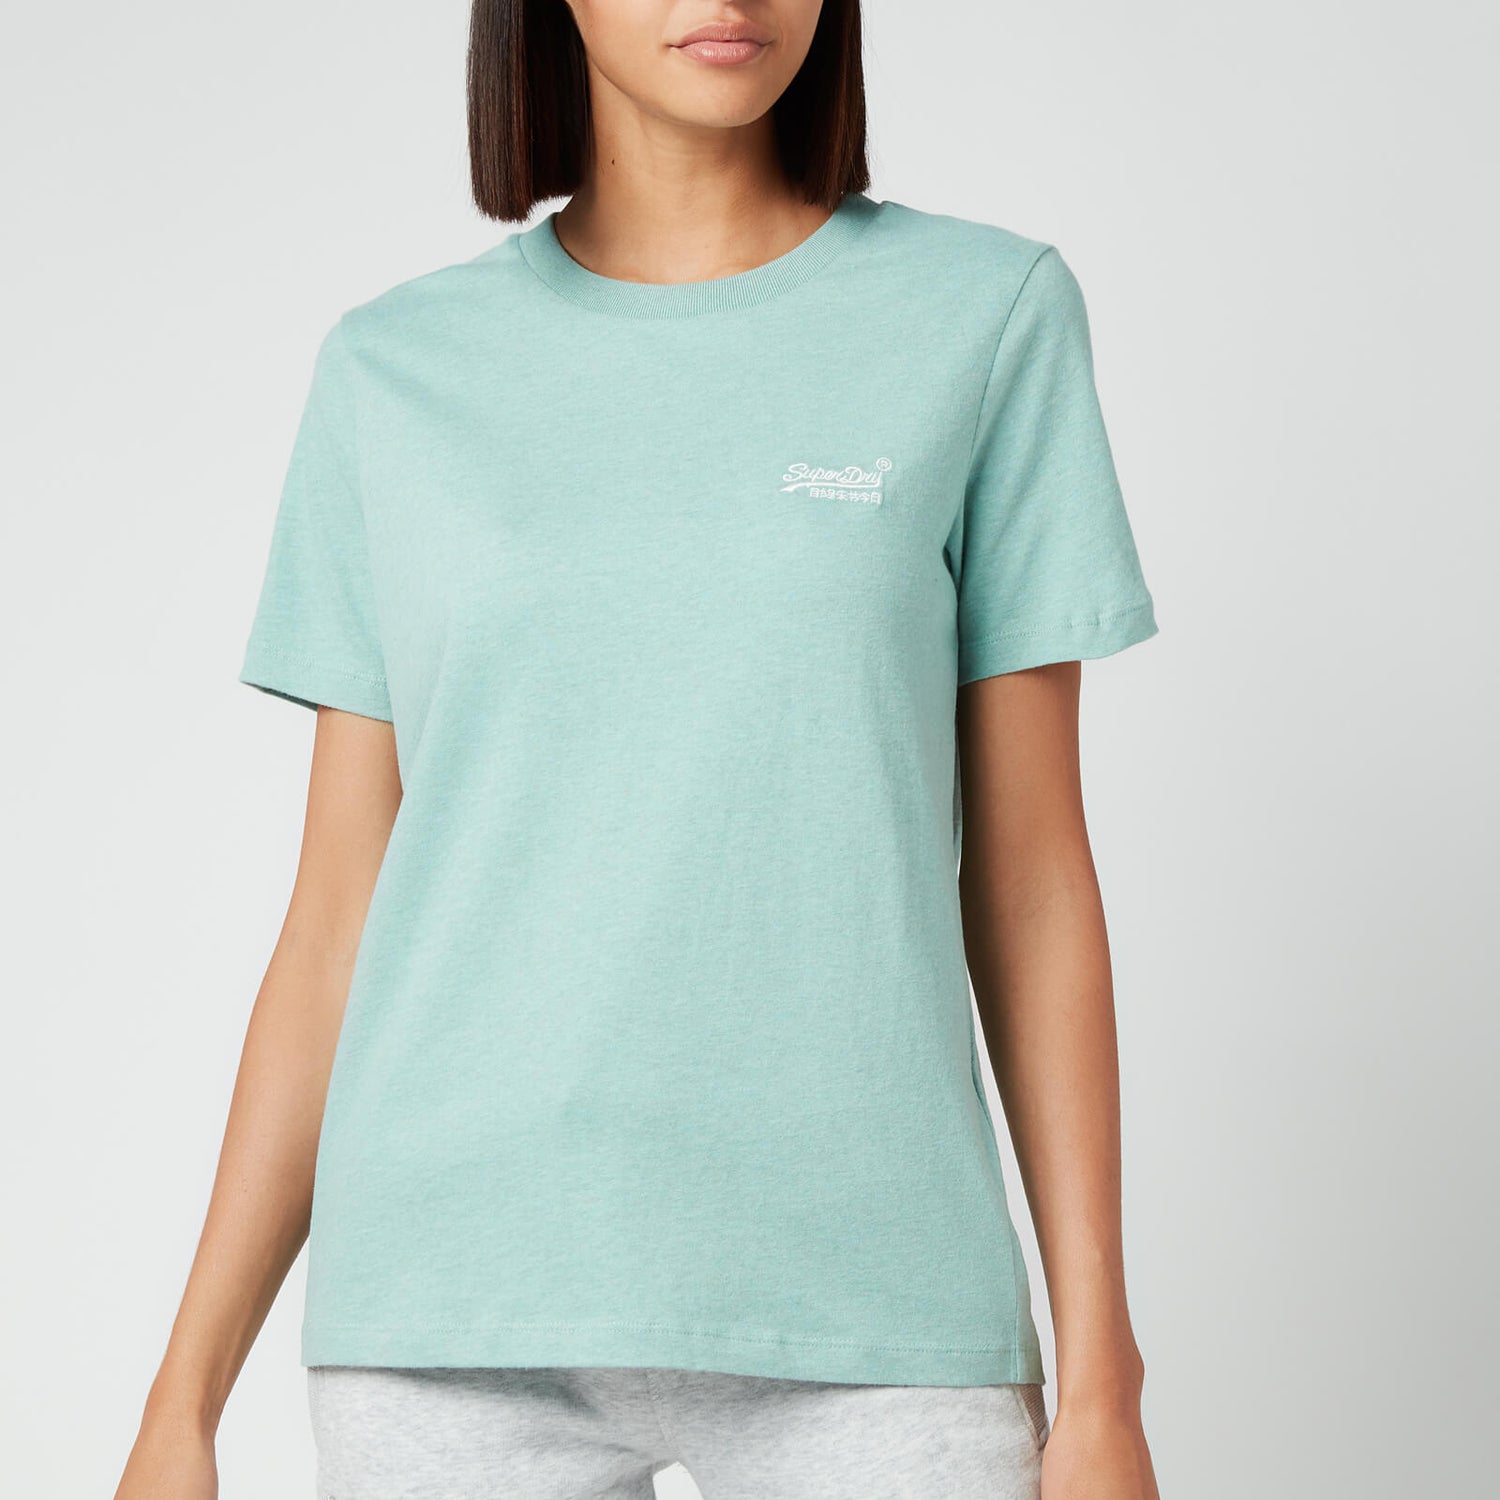 Superdry Women's Orange Label Classic T-Shirt - Sage Marl